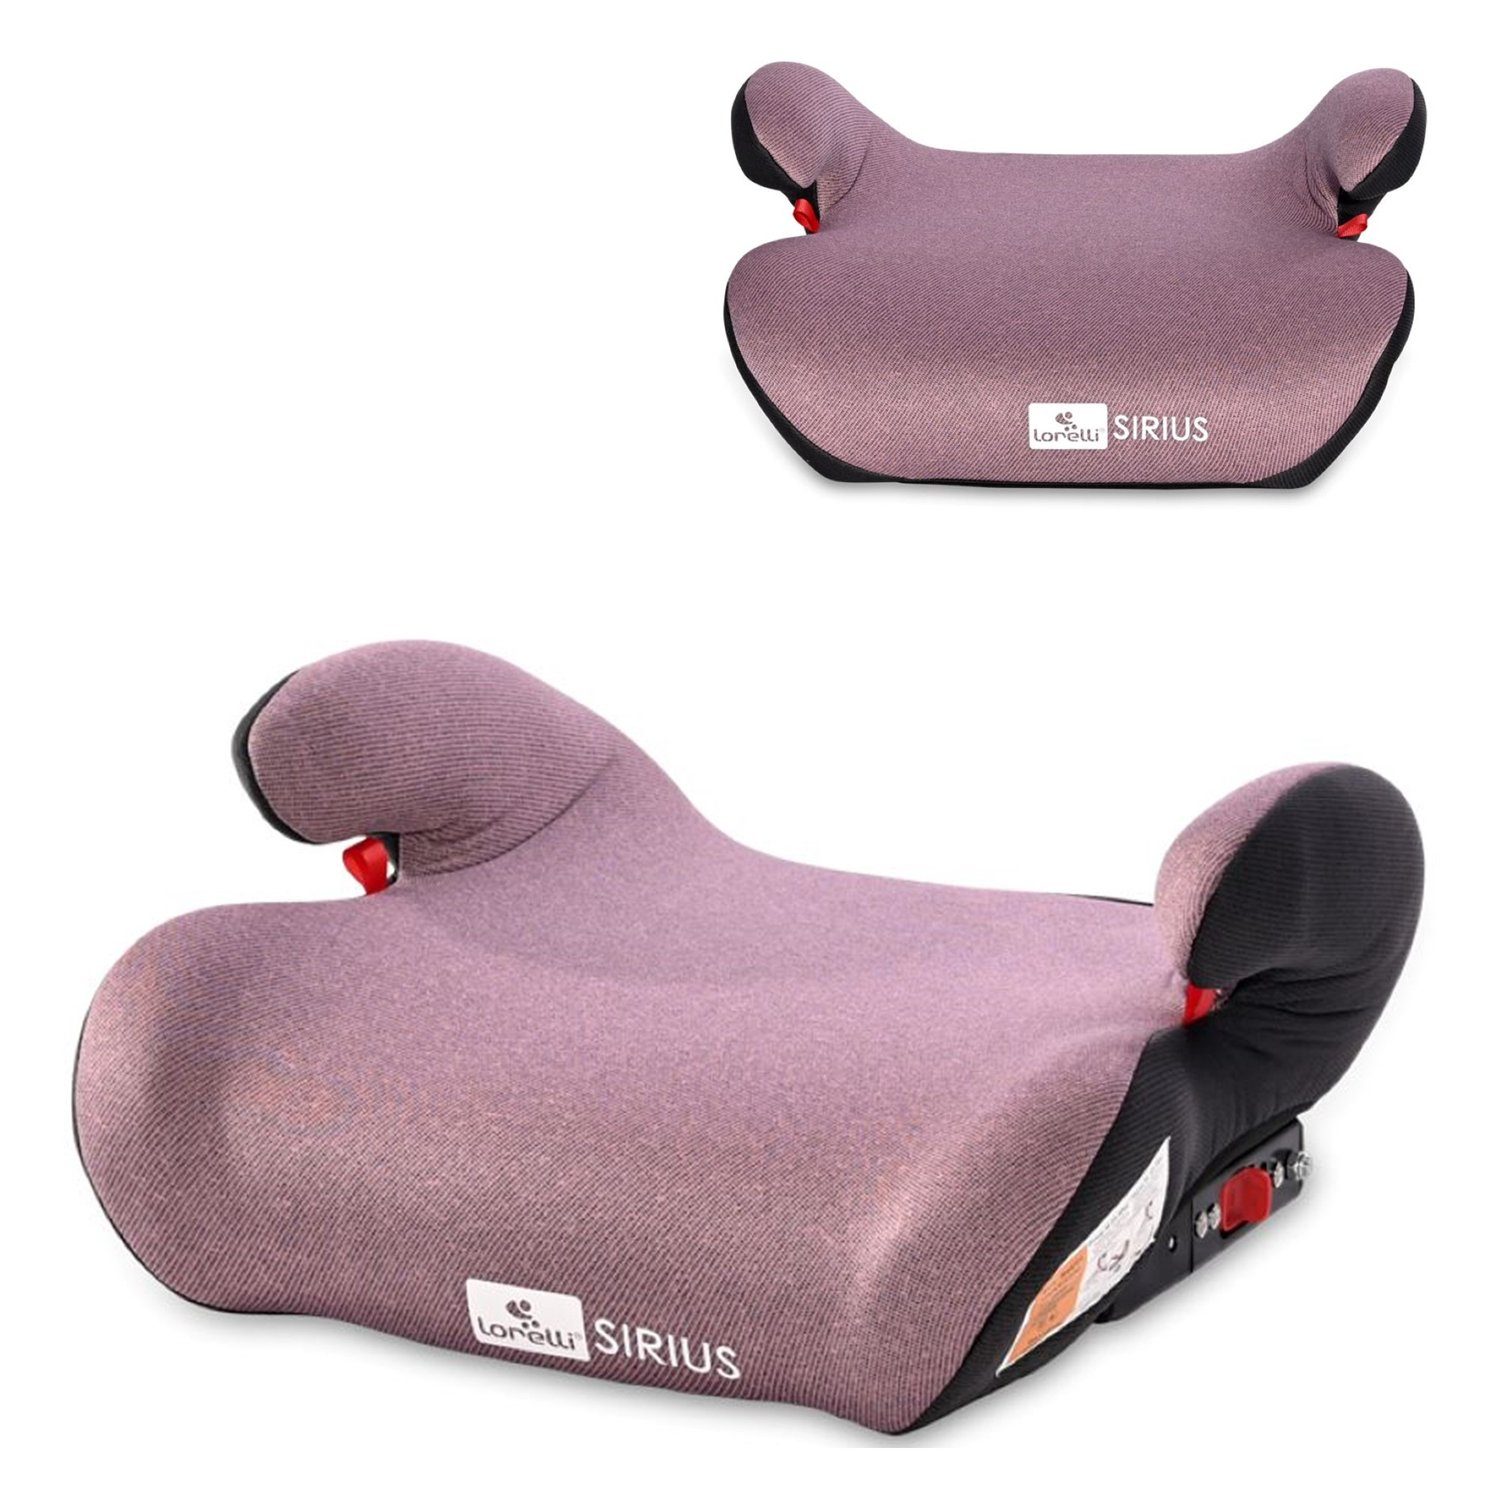 Lorelli Kindersitzerhöhung Armlehne Isofix - 36kg) kg, pink (22 3, abnehmbar Sitzerhöhung 36 Bezug bis: Gruppe Sirius